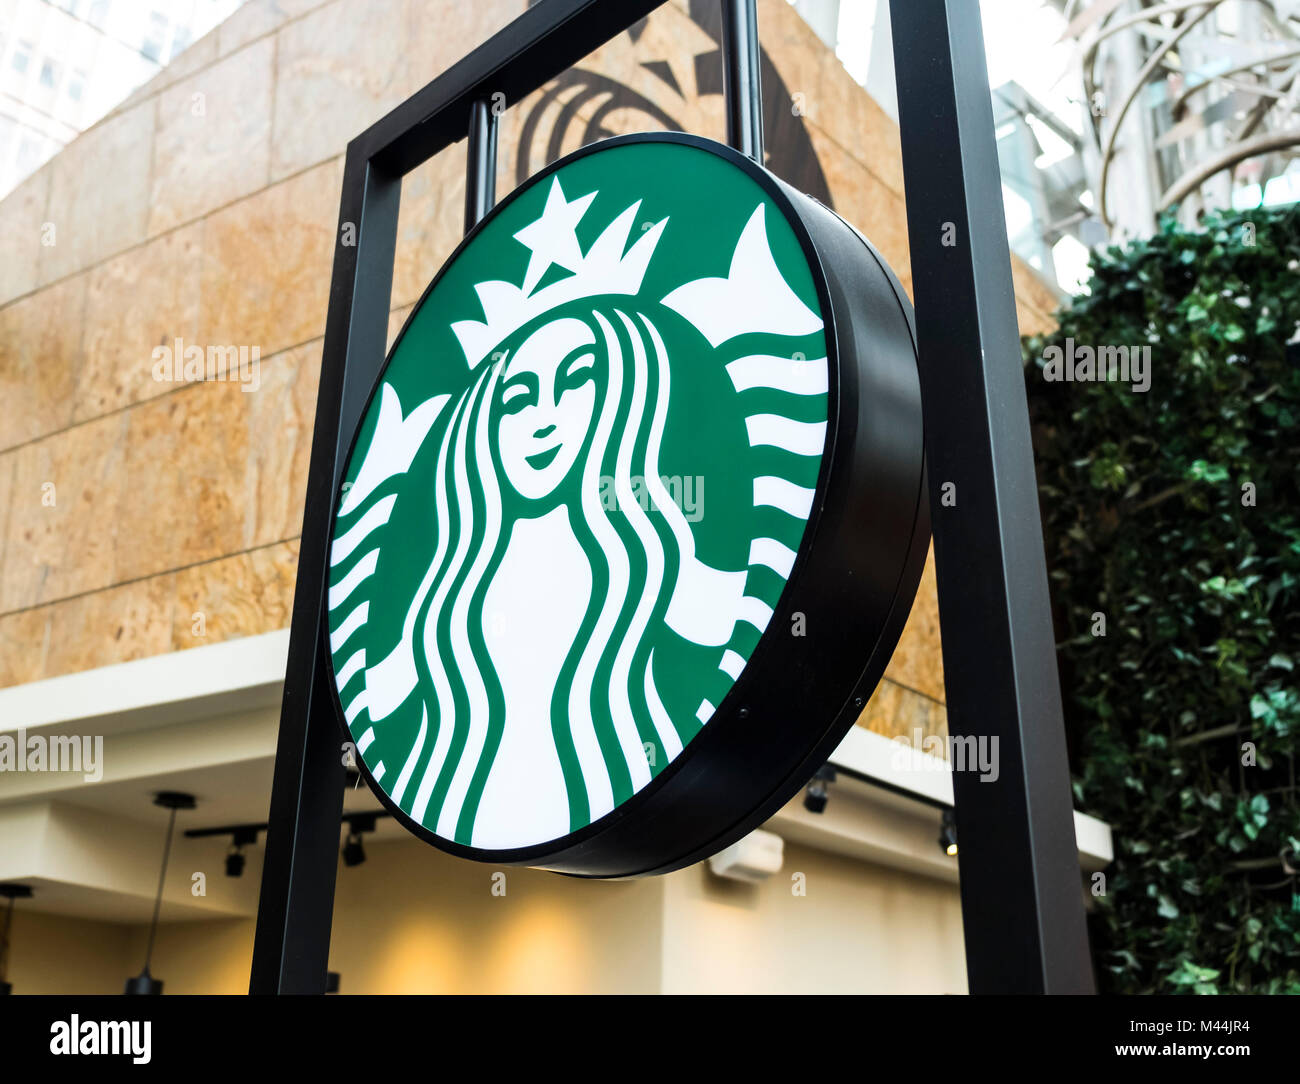 Hong Kong - 11. Februar 2018: Starbucks in Hongkong. Starbucks Corporation ist ein US-amerikanischer Kaffee und Kaffeehaus Kette. Stockfoto